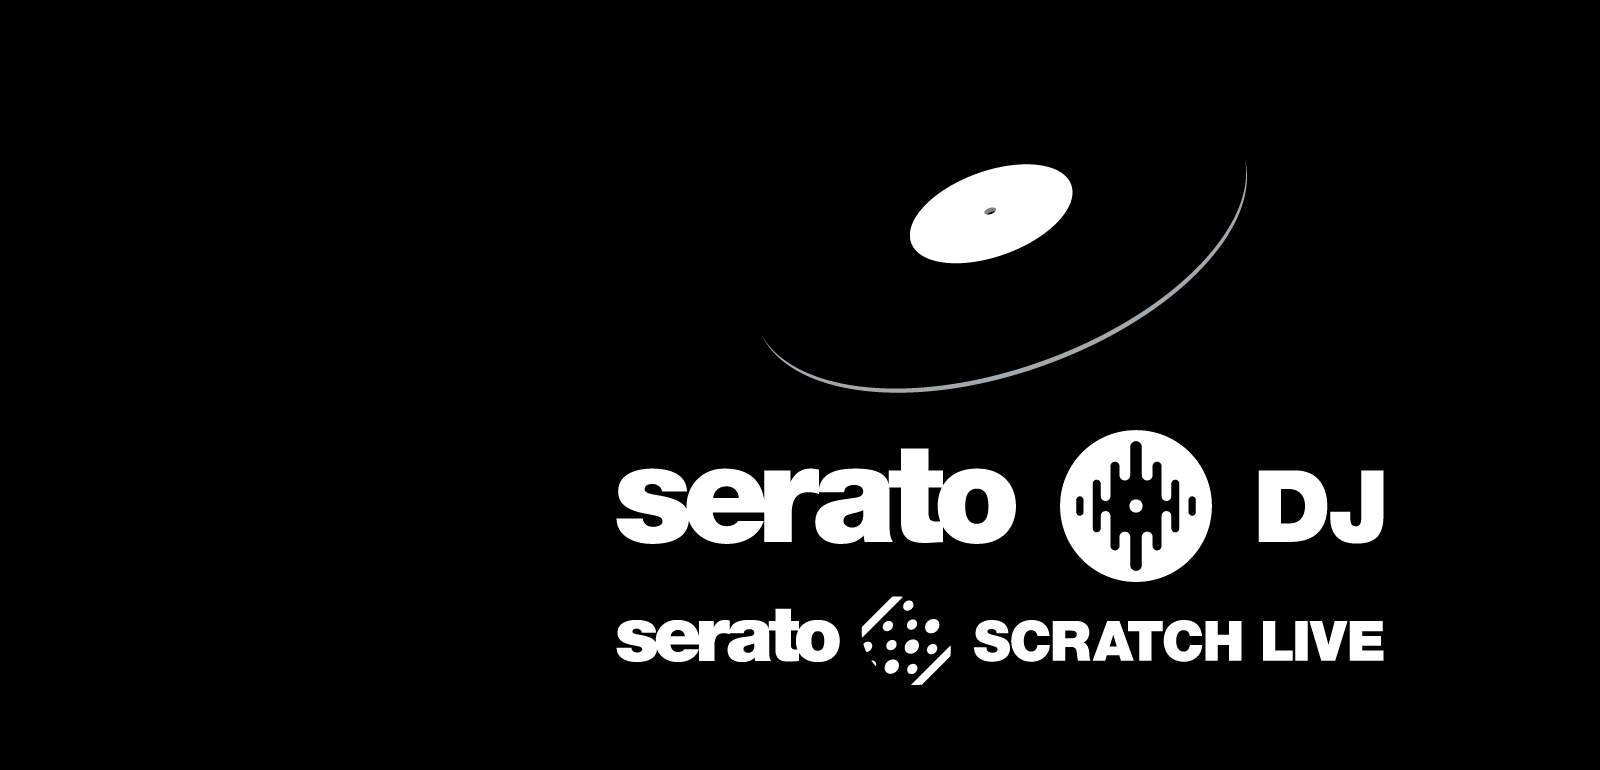 serato dj 1.8 download free